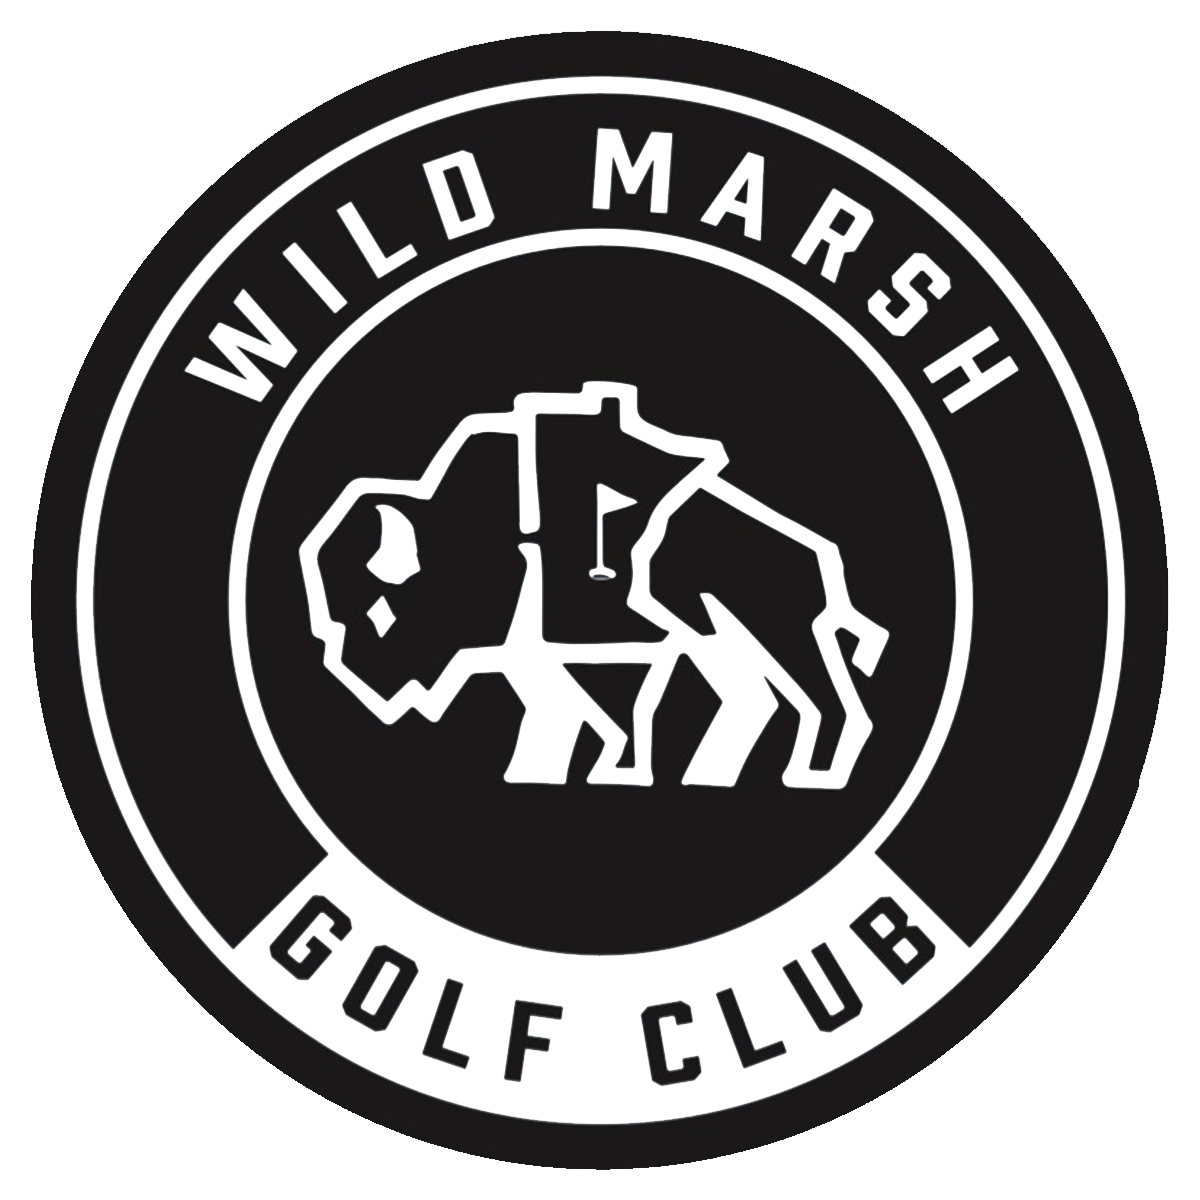 Wild Marsh Golf Club - 18 Hole Championship Golf Course in Buffalo, Minnesota USA